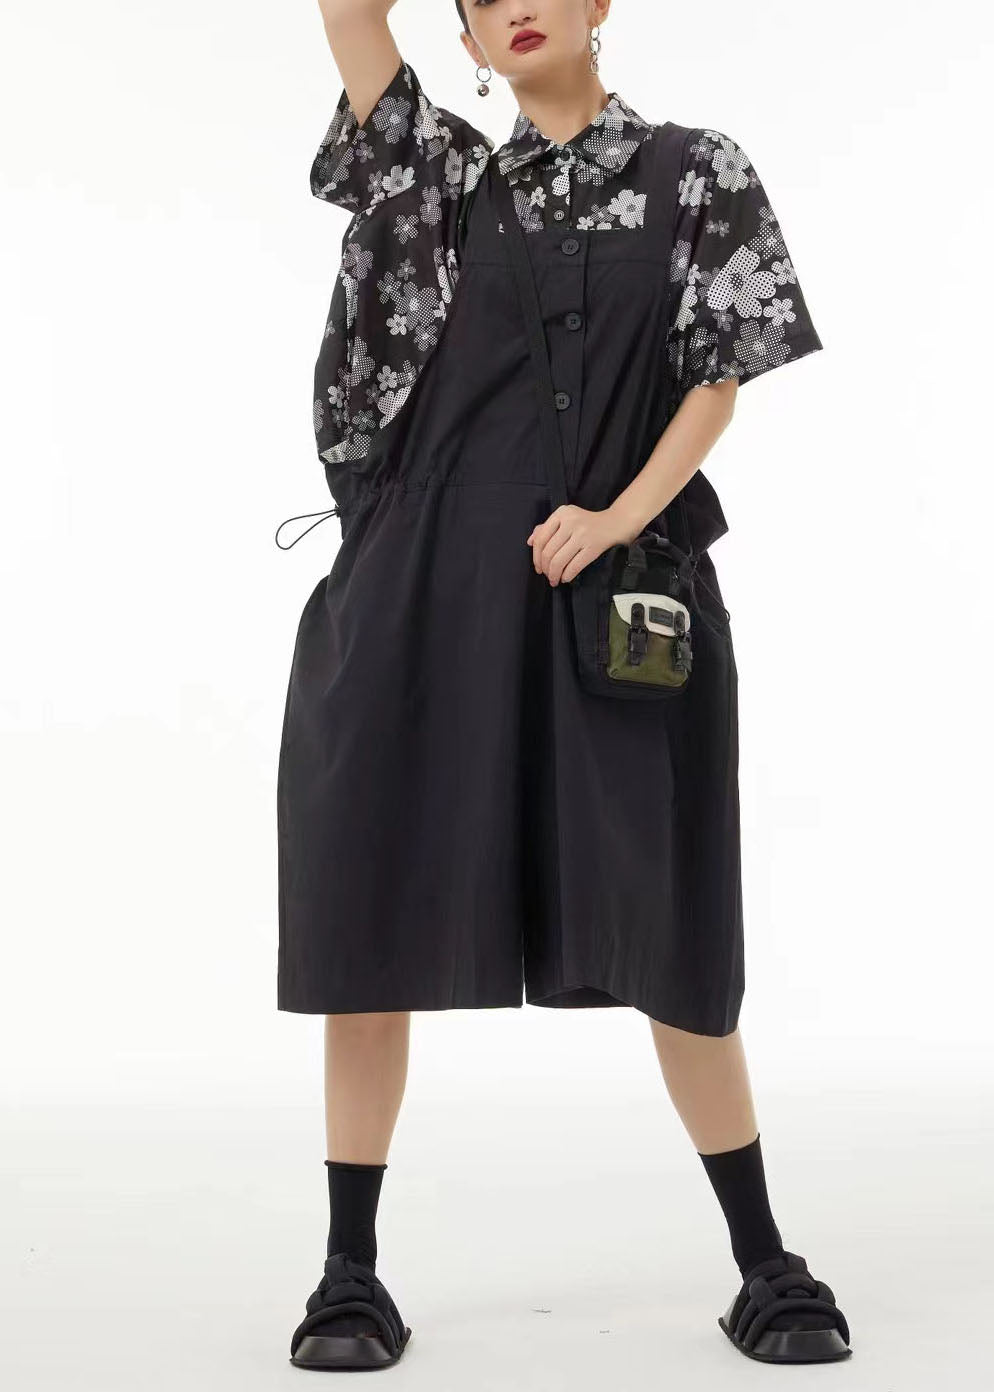 Bohemian Black Oversized Drawstring Cotton Overalls Jumpsuit Jumpsuits Summer TS1036 - fabuloryshop